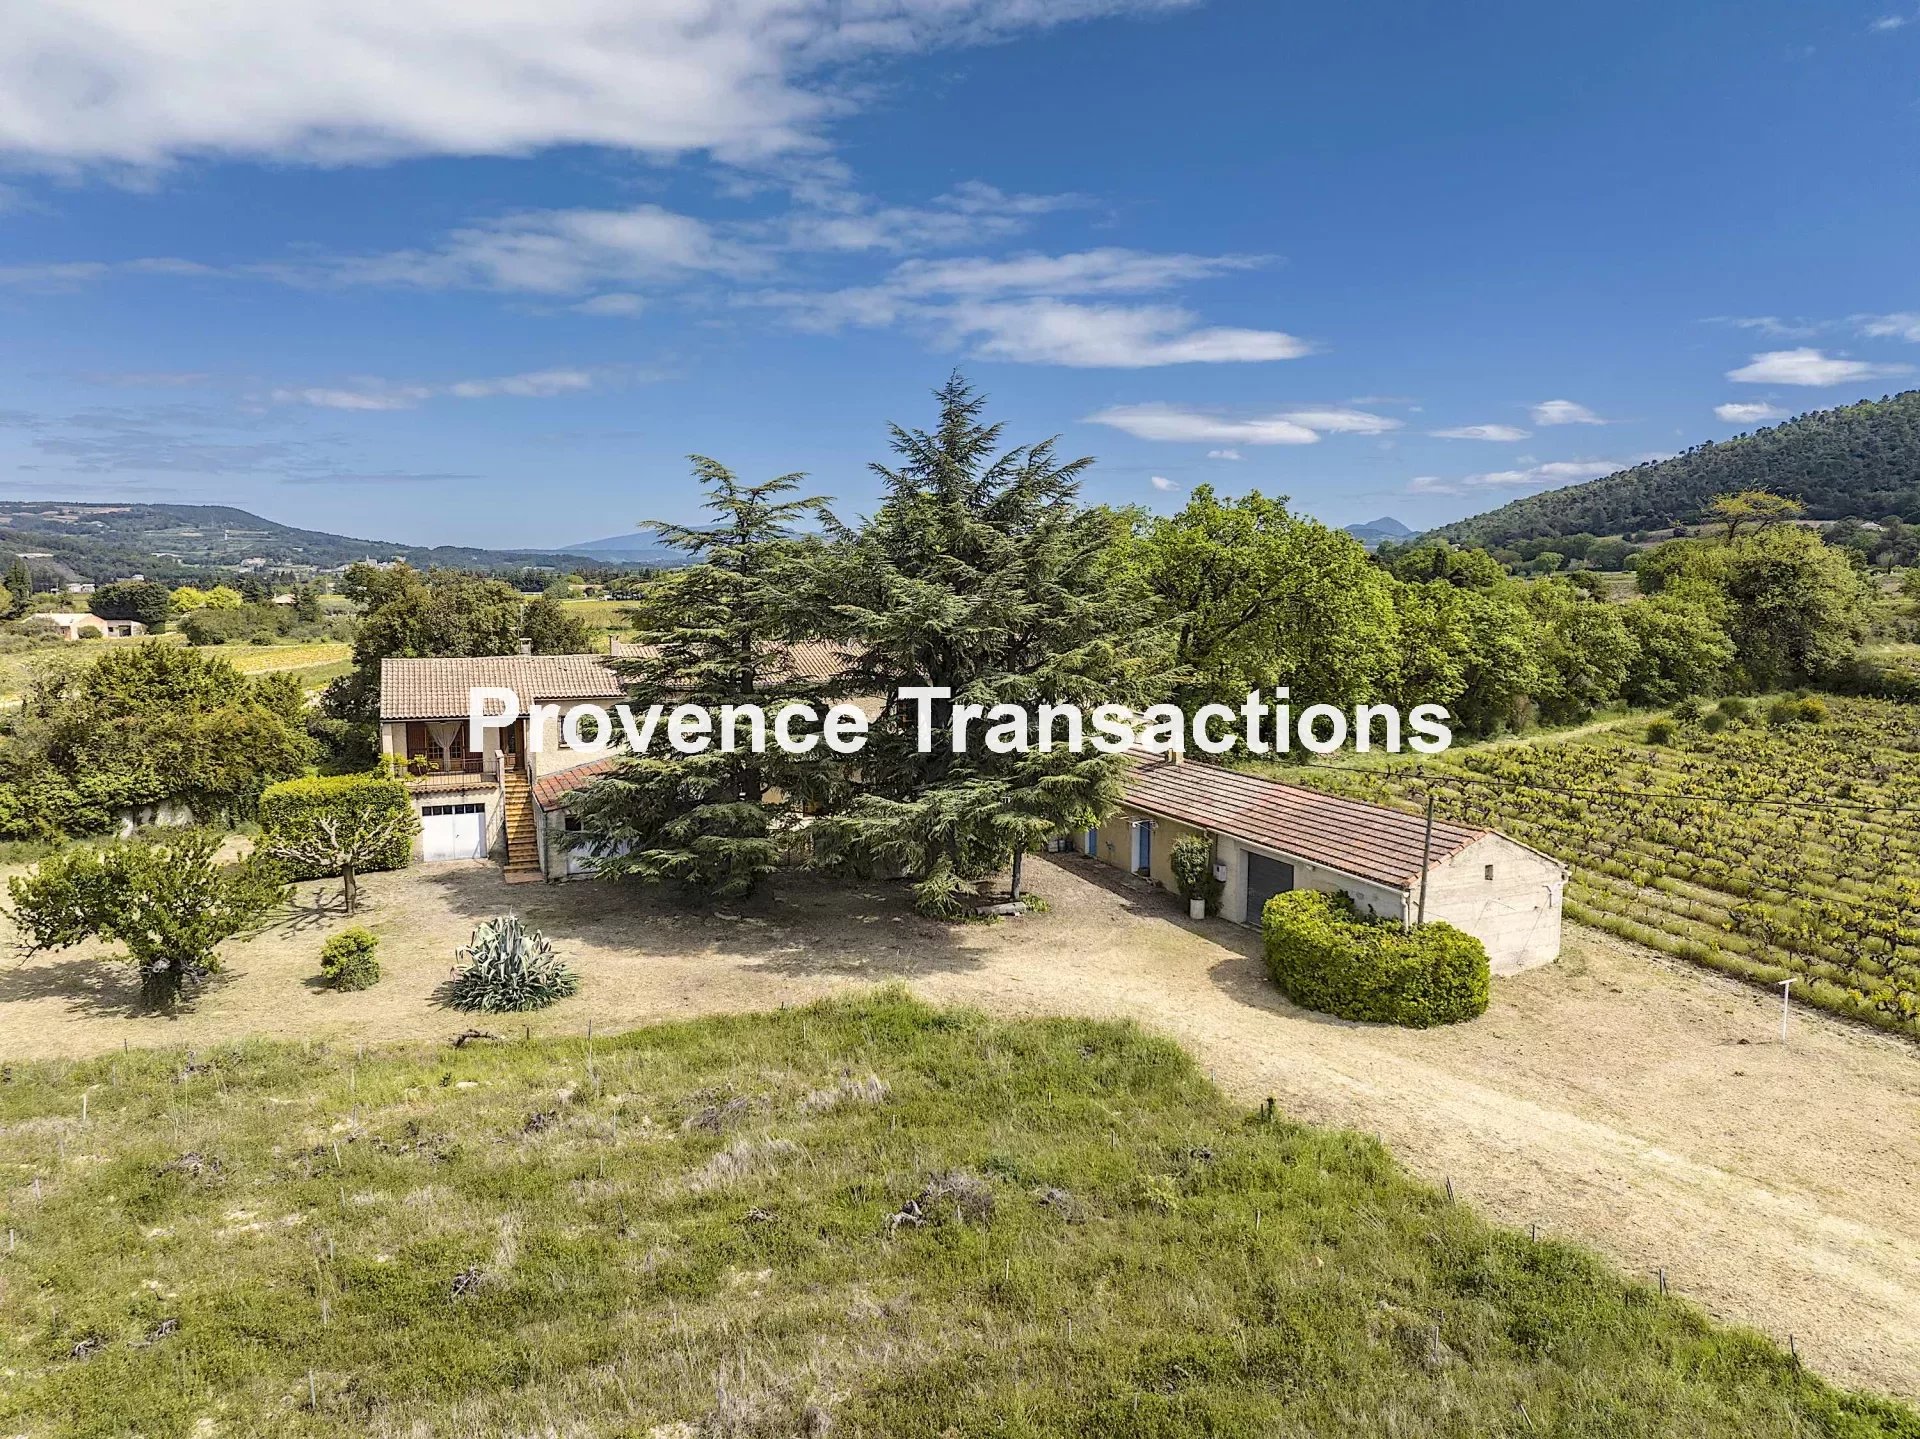 Sous offre / Provence Transactions